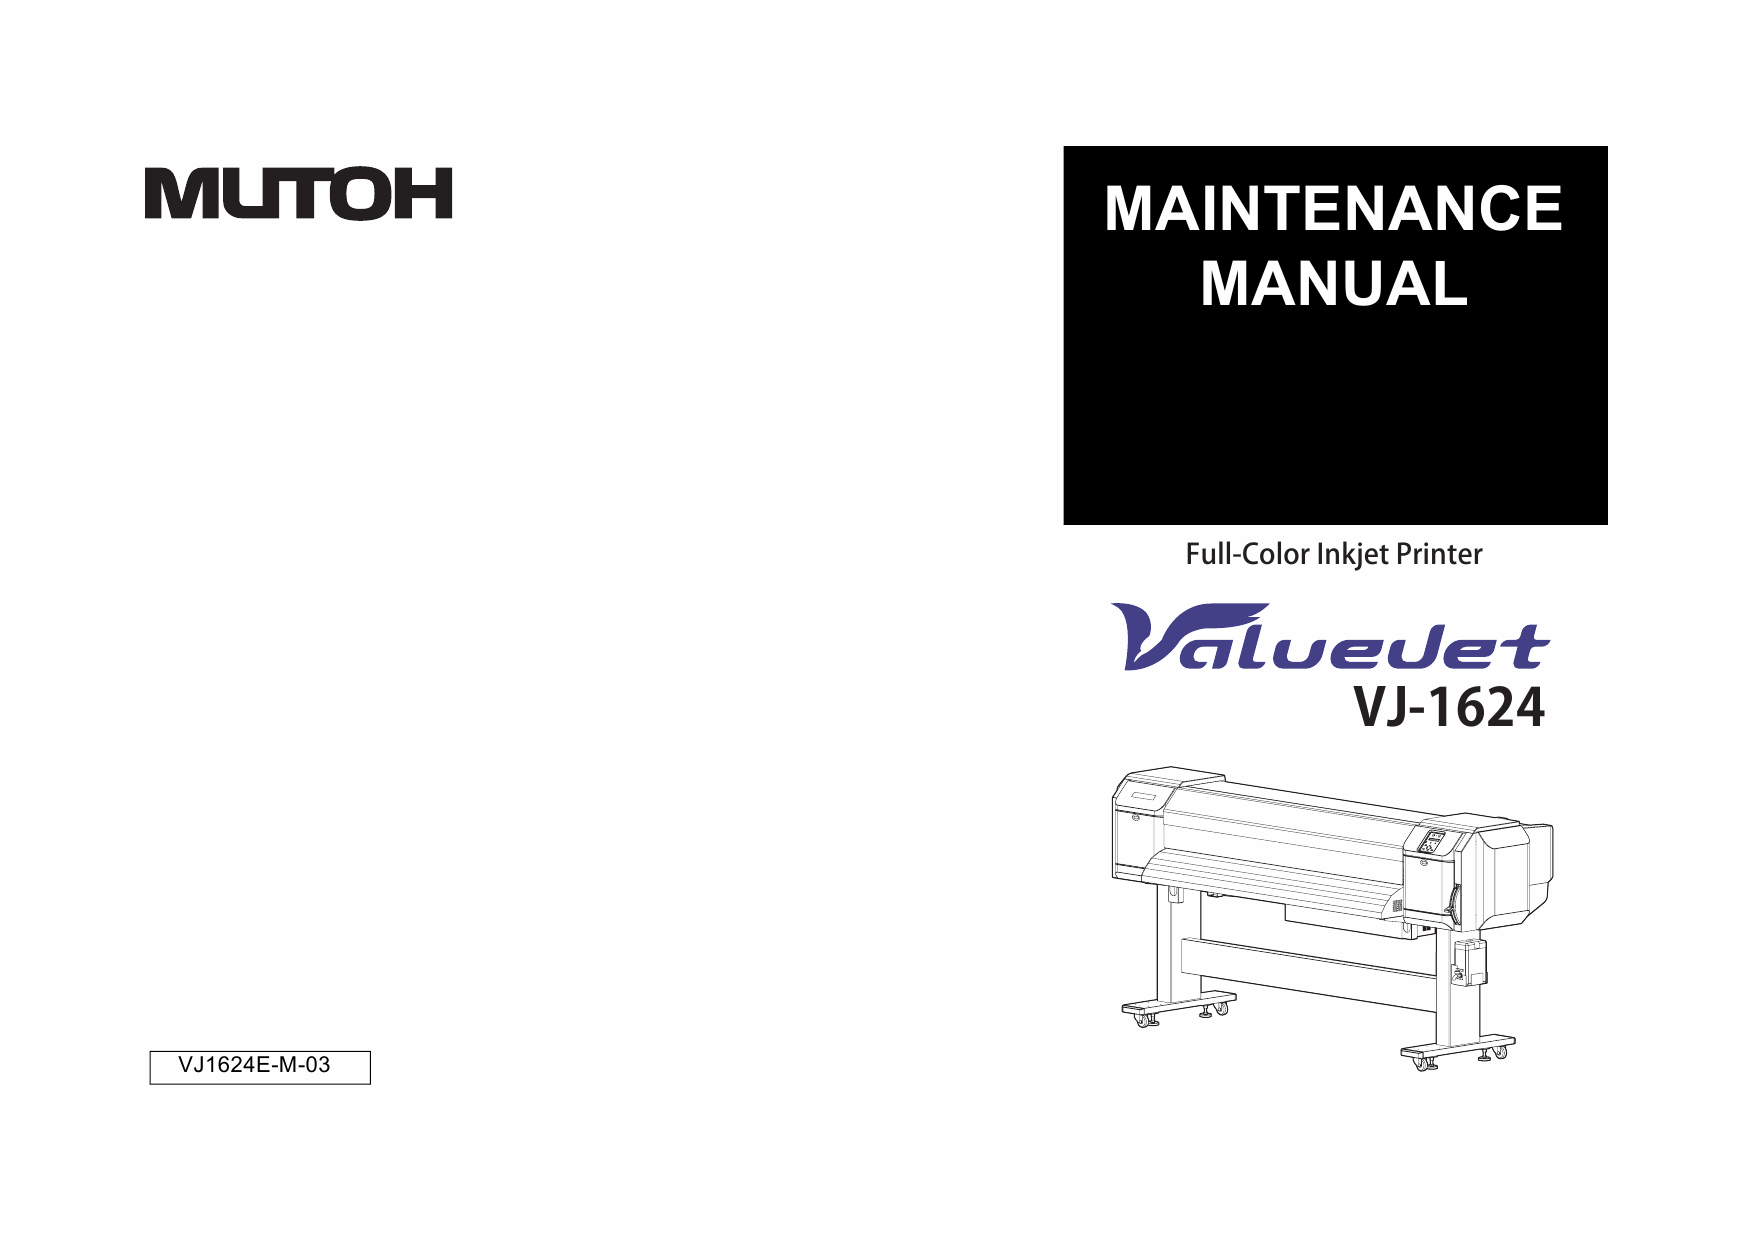 MUTOH ValueJet VJ 1624 MAINTENANCE Service and Parts Manual-1